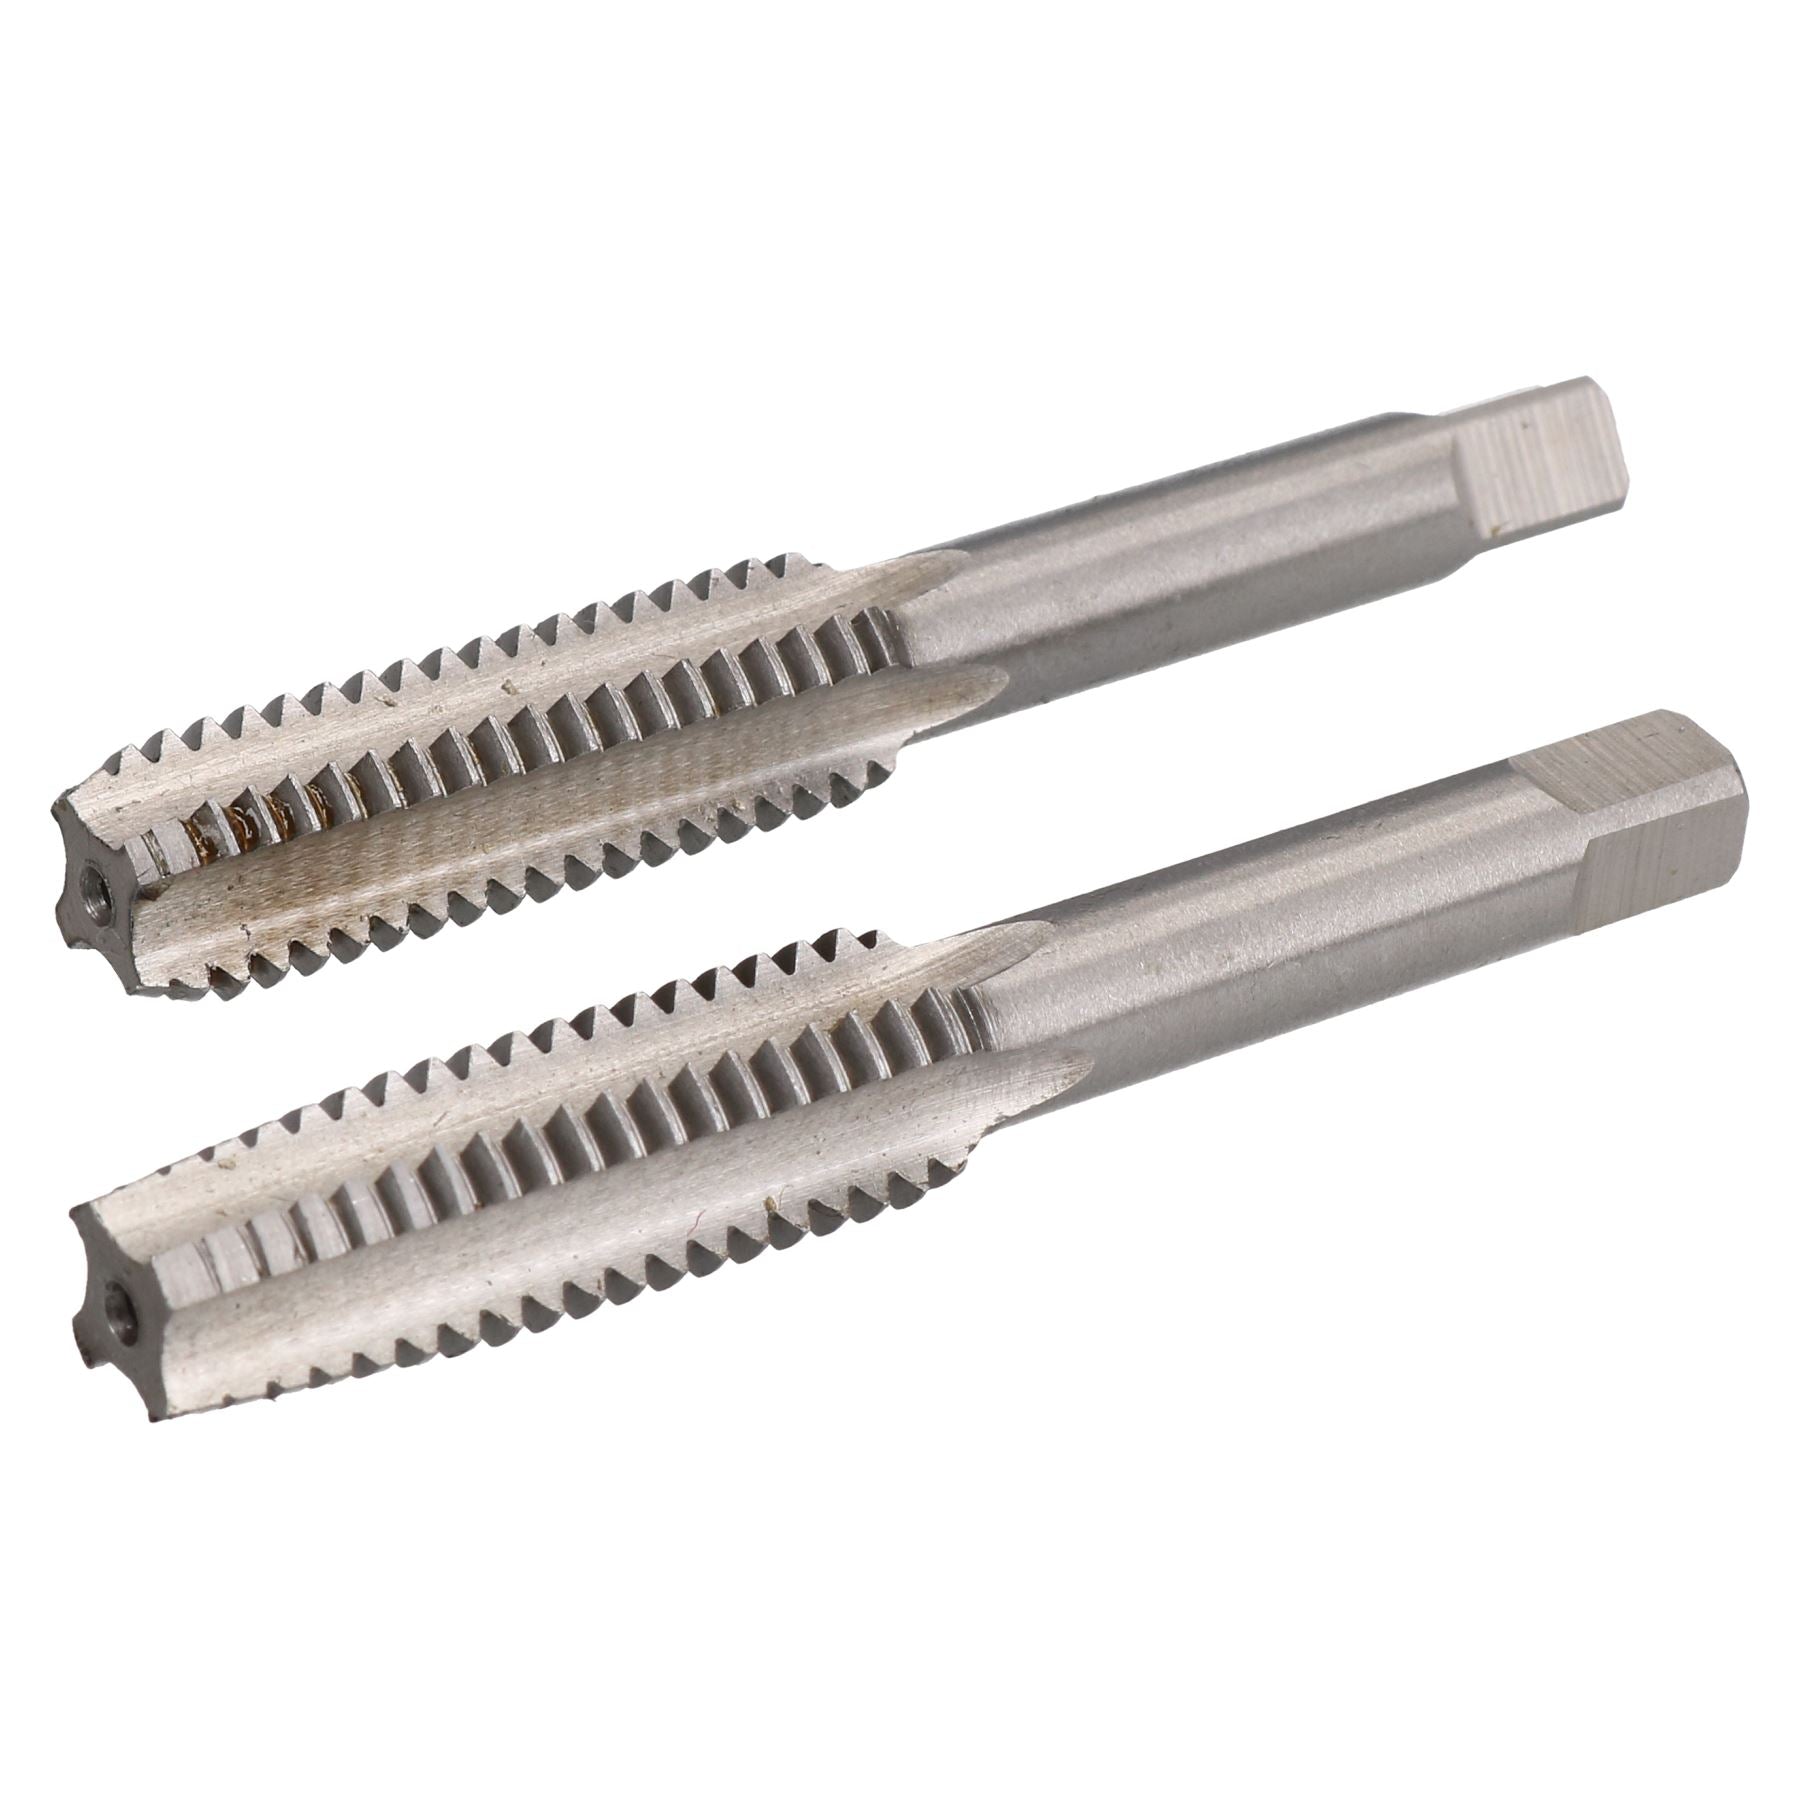 Whitworth Taper & Plug 1/8" - 1/2" Sizes Tap Thread Cutter